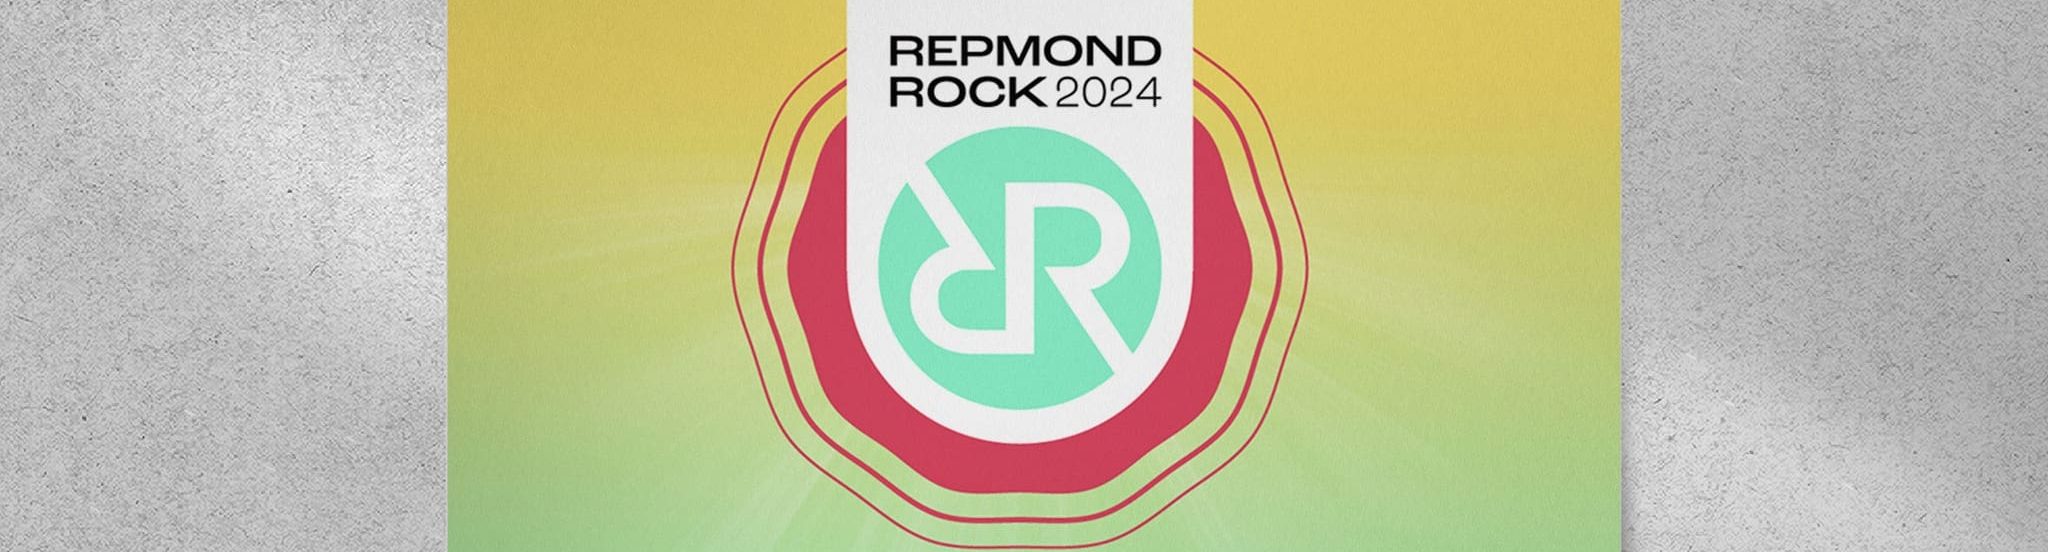 Repmond Rock 2024